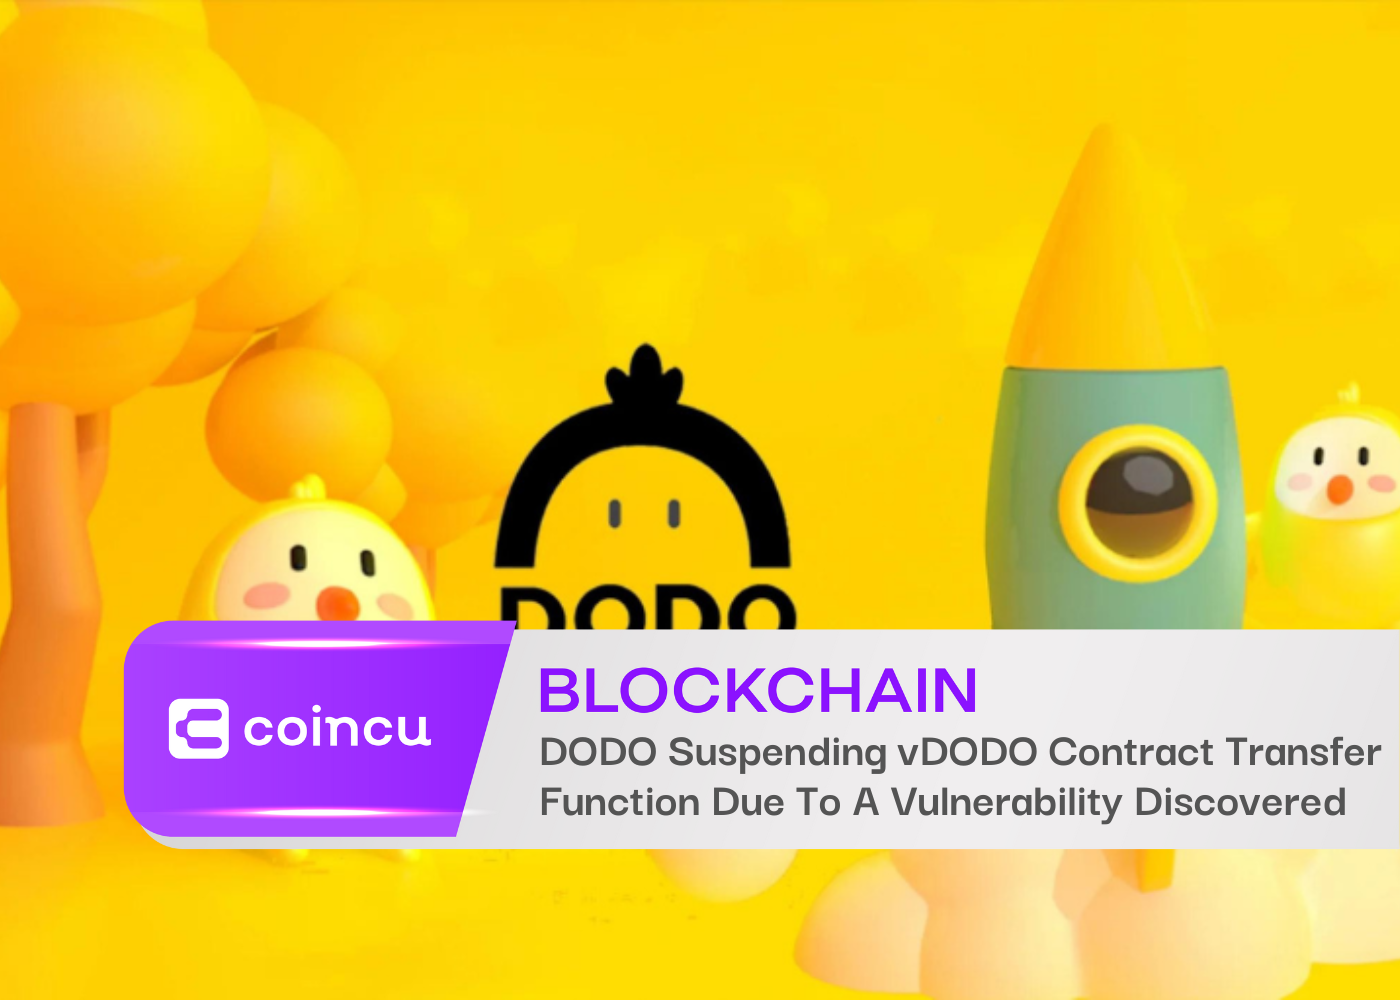 DODO Suspending vDODO Contract Transfer Function Due To A Vulnerability Discovered